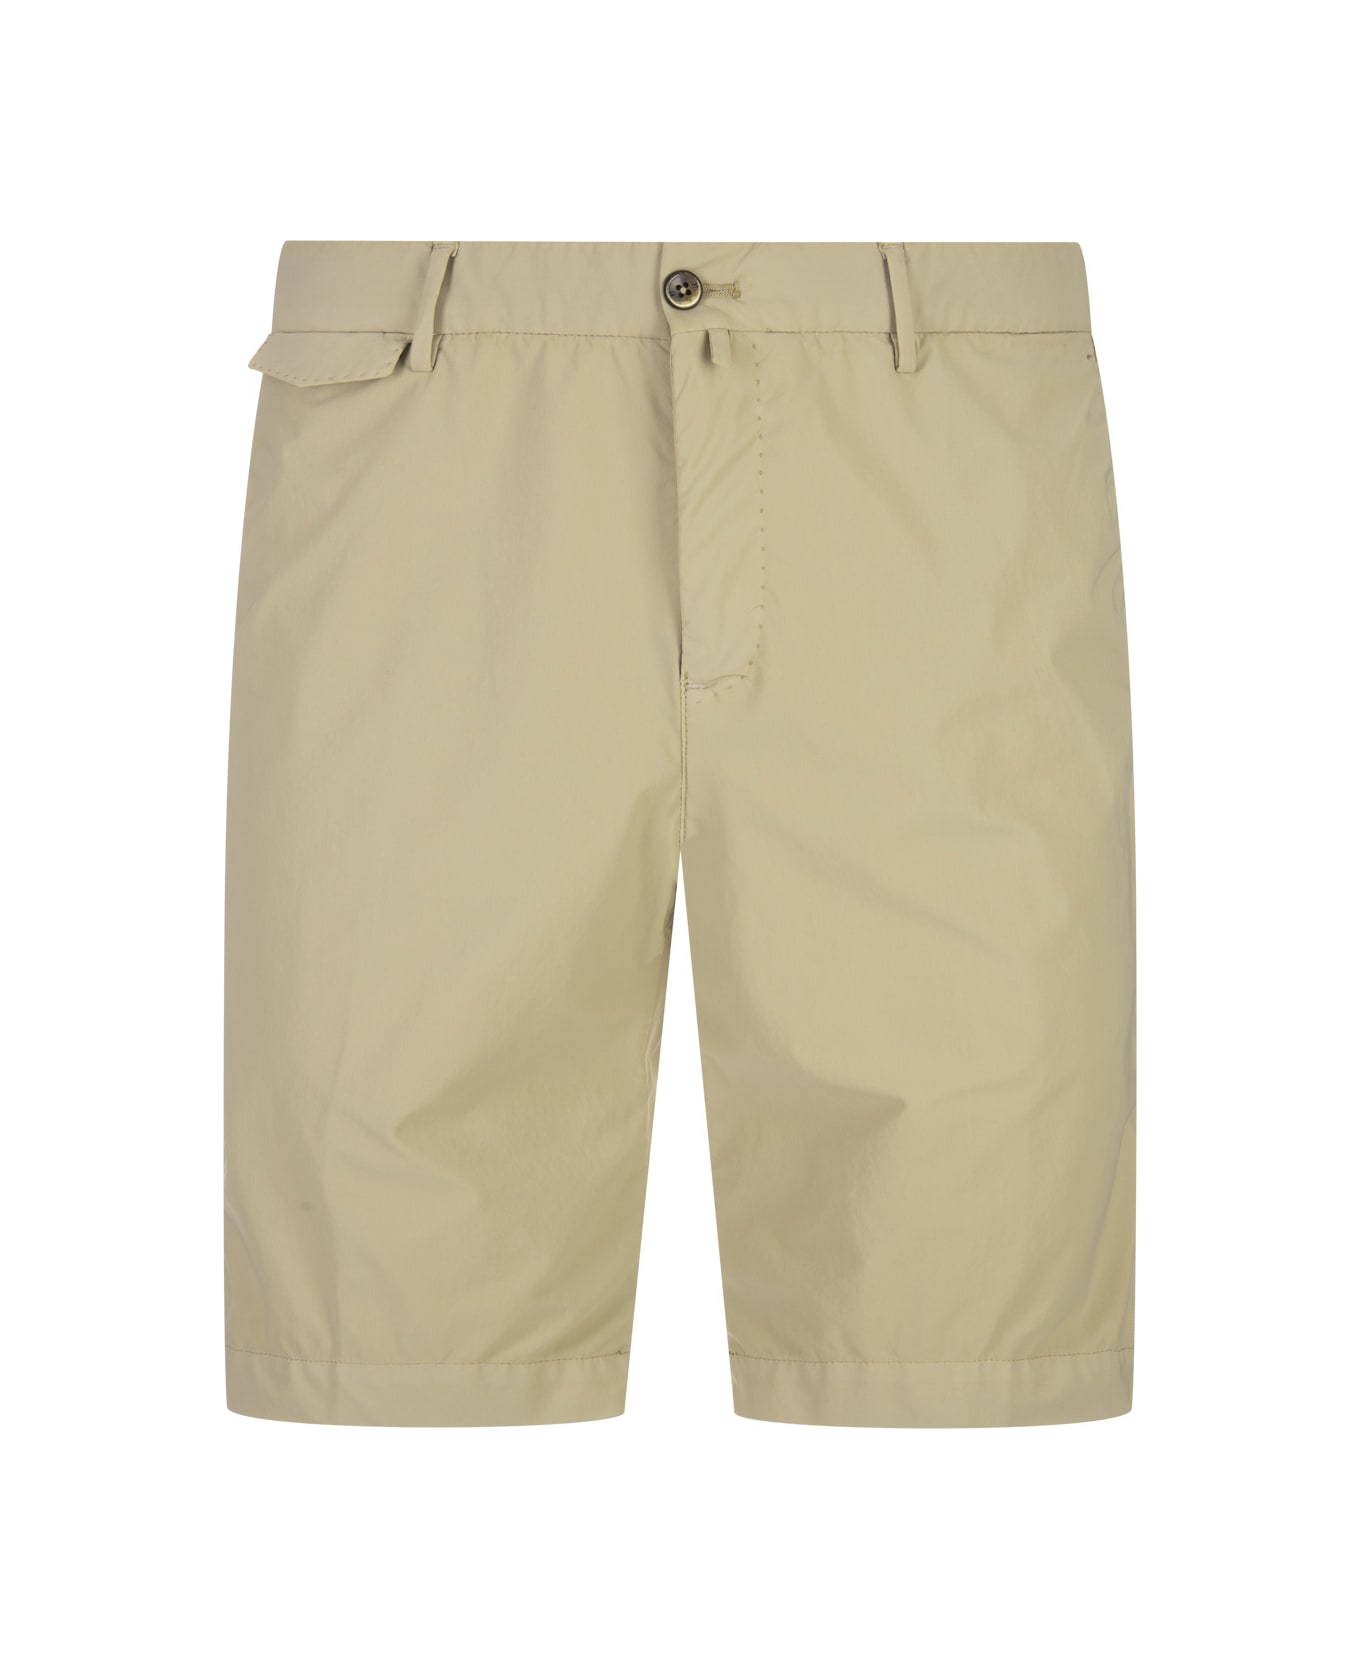 PT Bermuda Green Stretch Cotton Shorts - Green